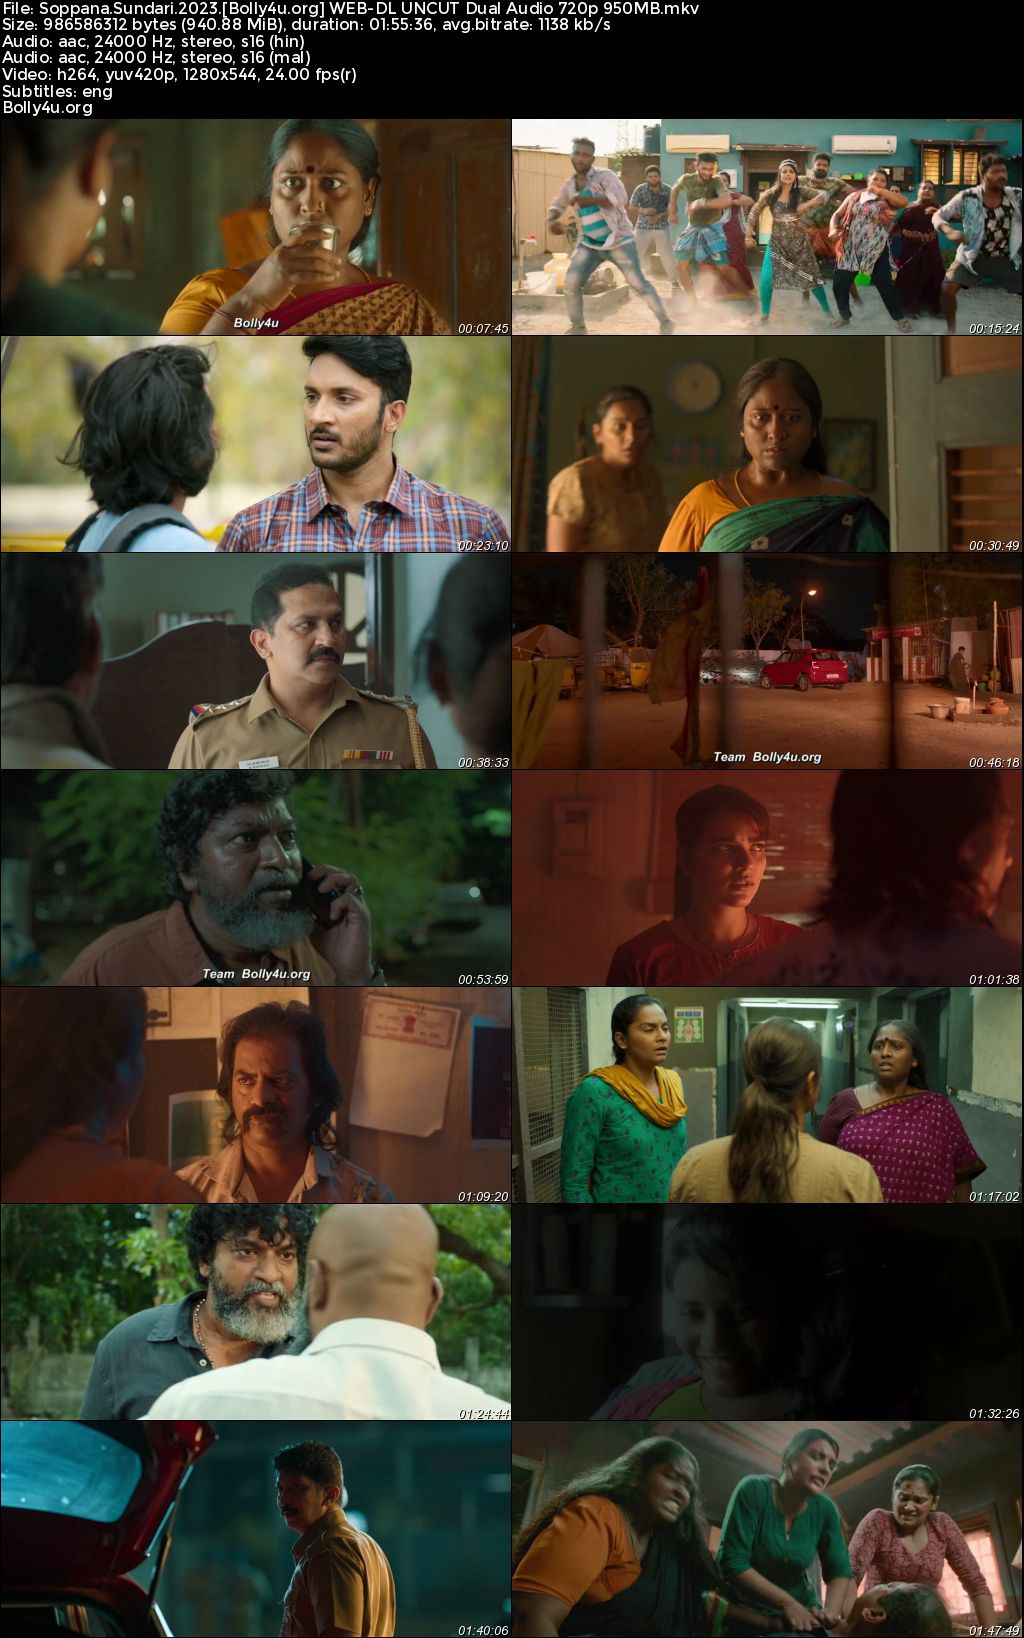 Soppana Sundari 2023 WEB-DL UNCUT Hindi Dual Audio ORG Full Movie Download 1080p 720p 480p